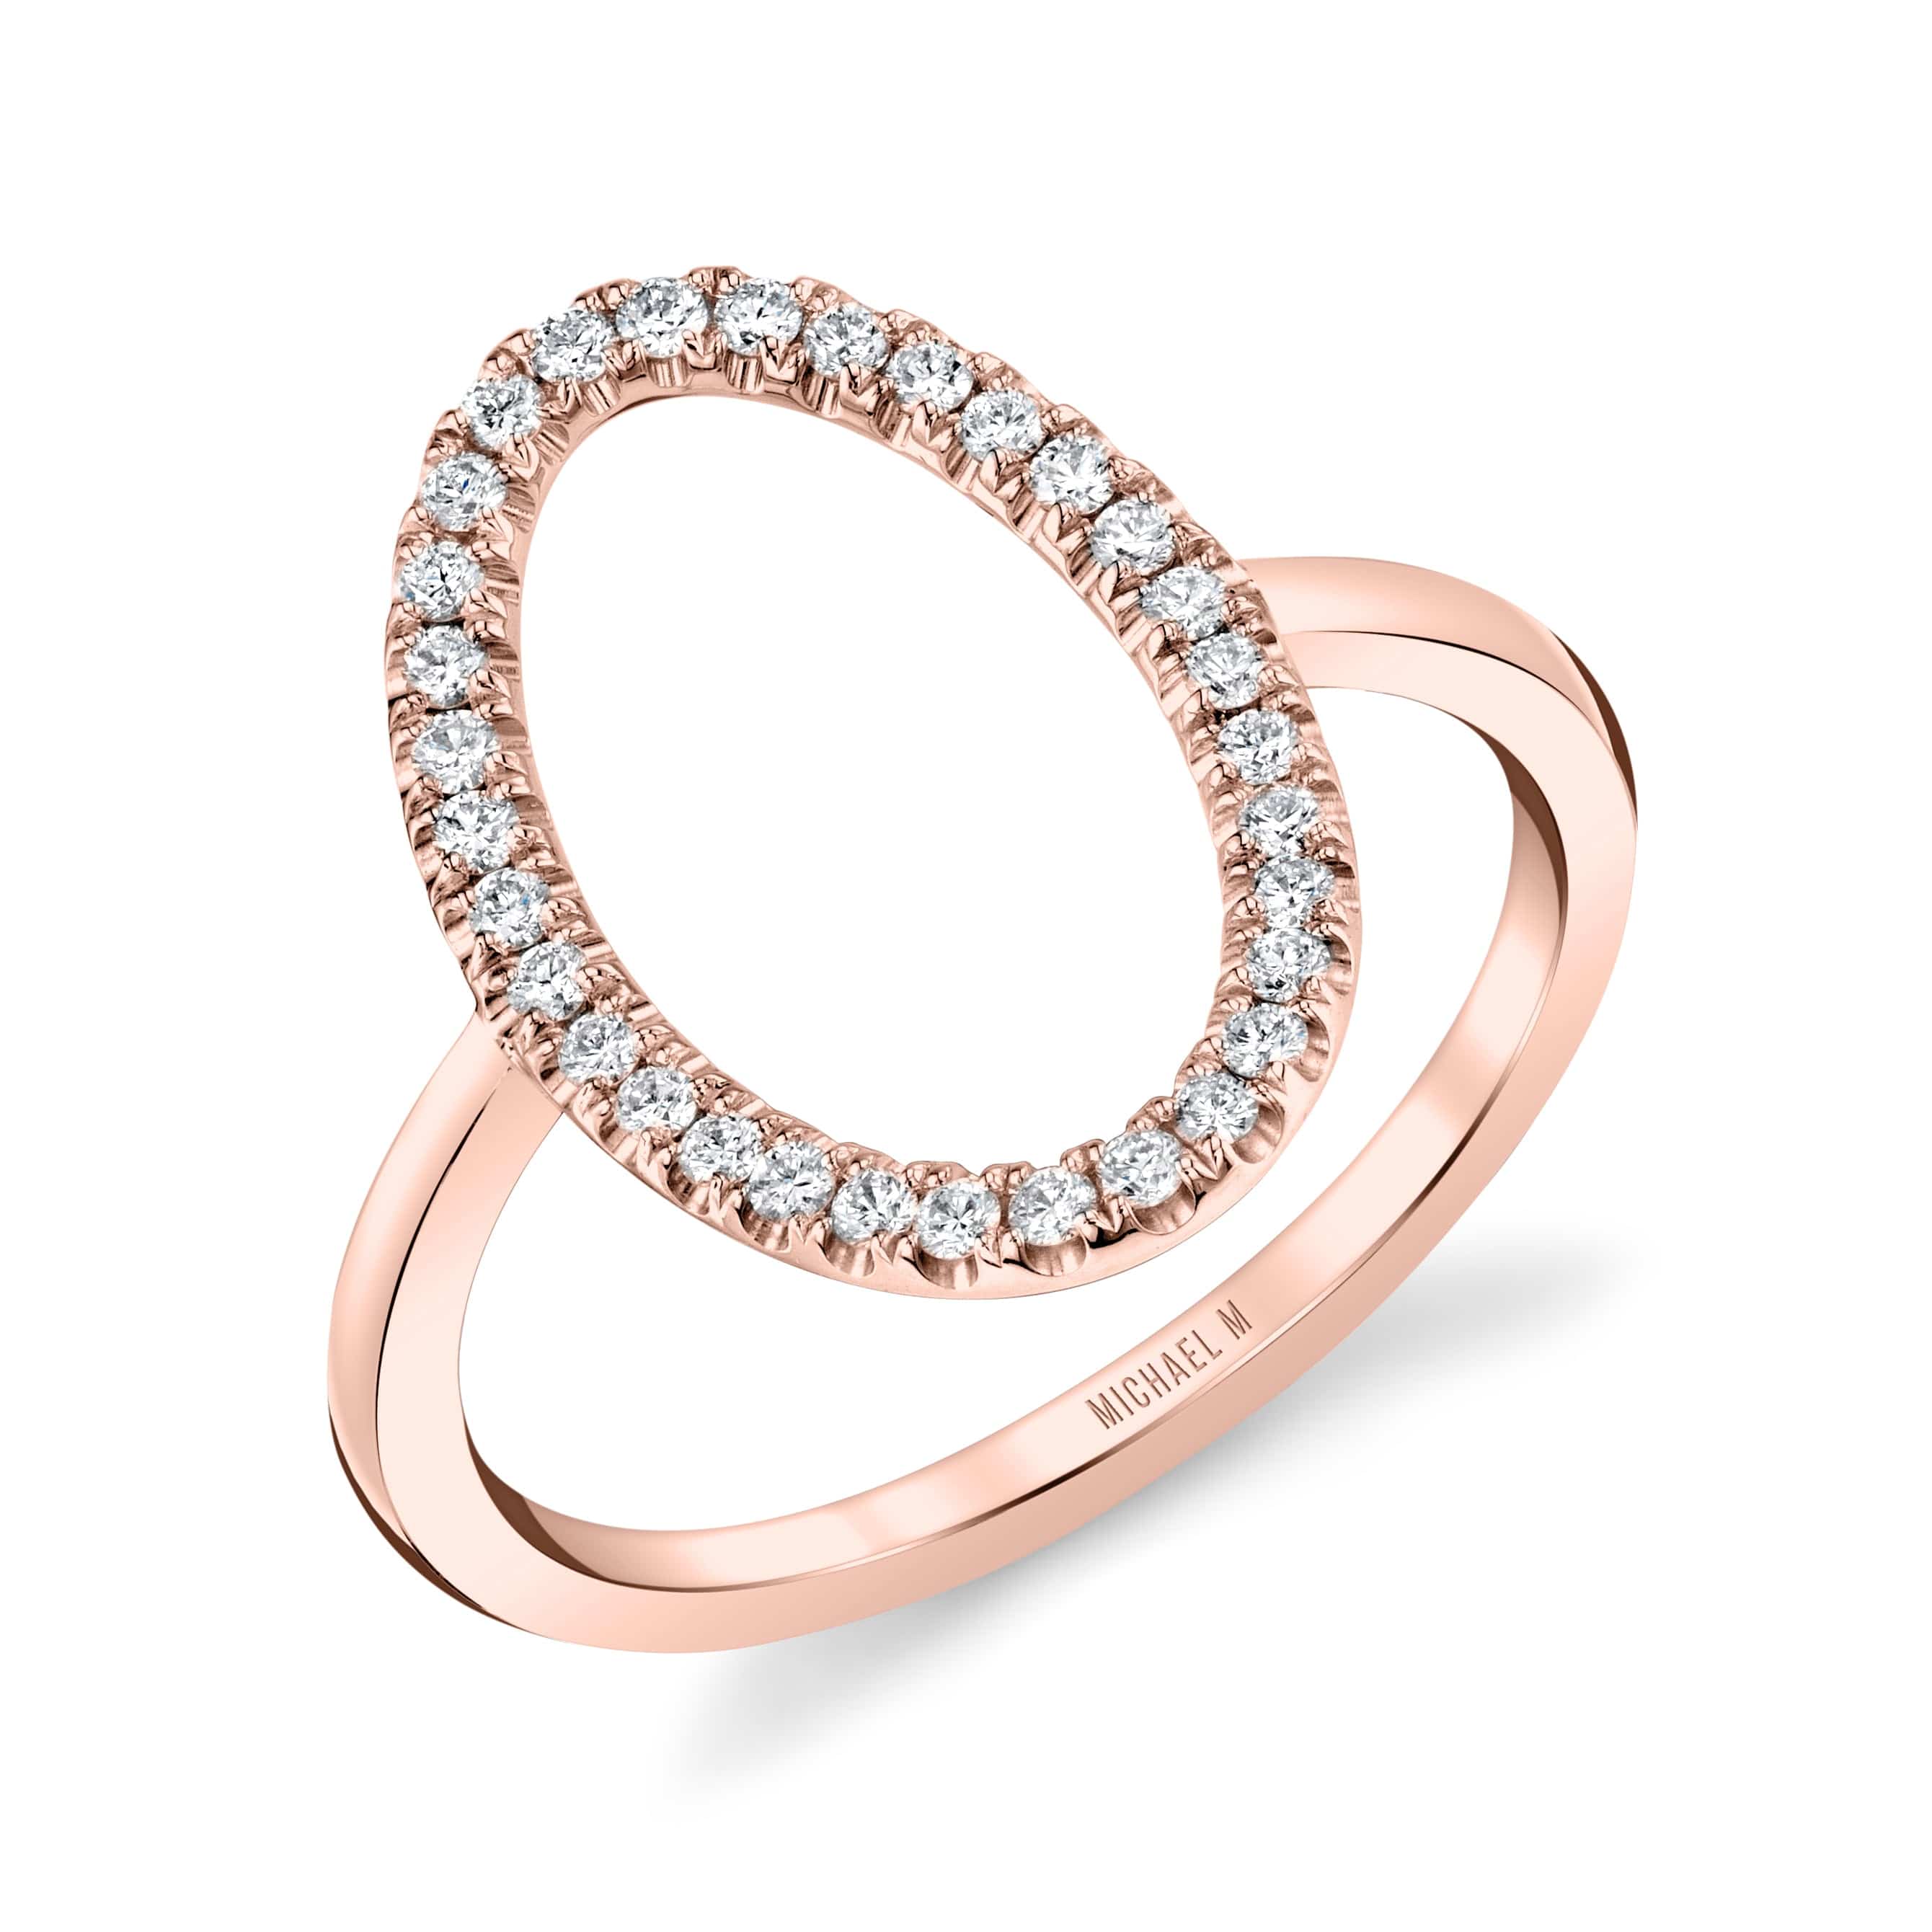 MICHAEL M Fashion Rings 14K Rose Gold / 4 Open Oval Diamond Ring F303-RG4